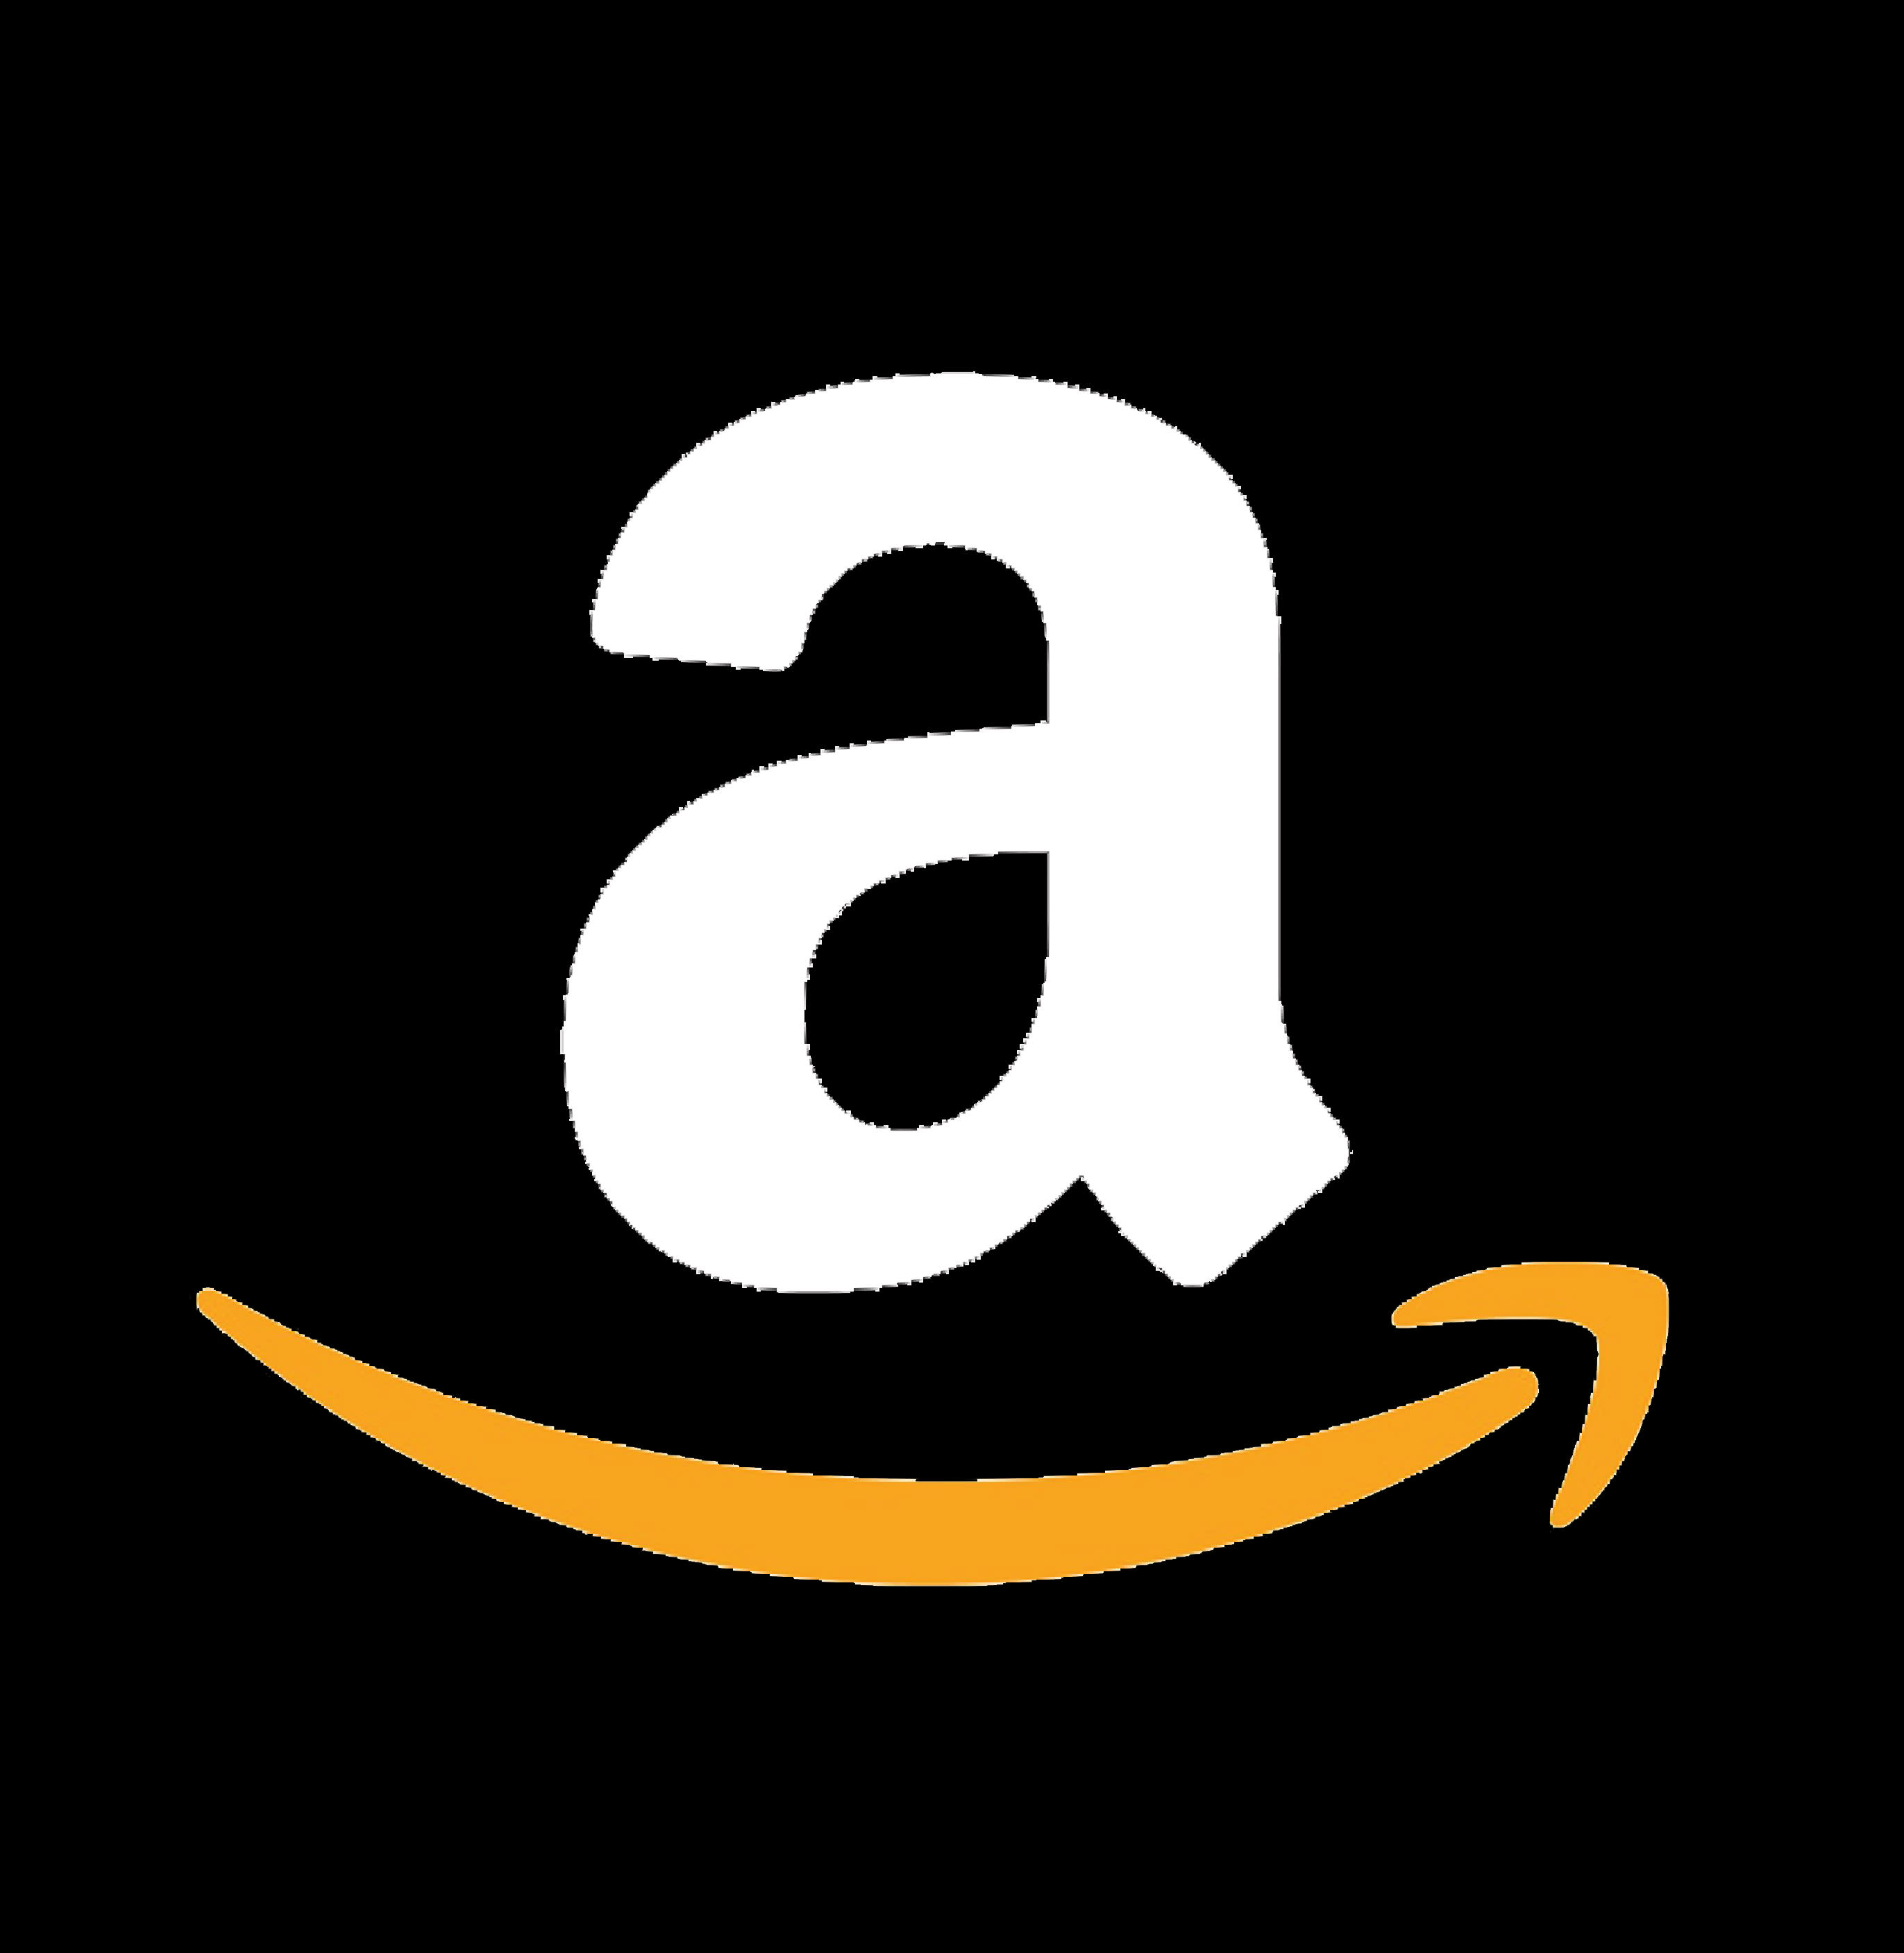 Amazon.com/code verification Code | Amazon Code